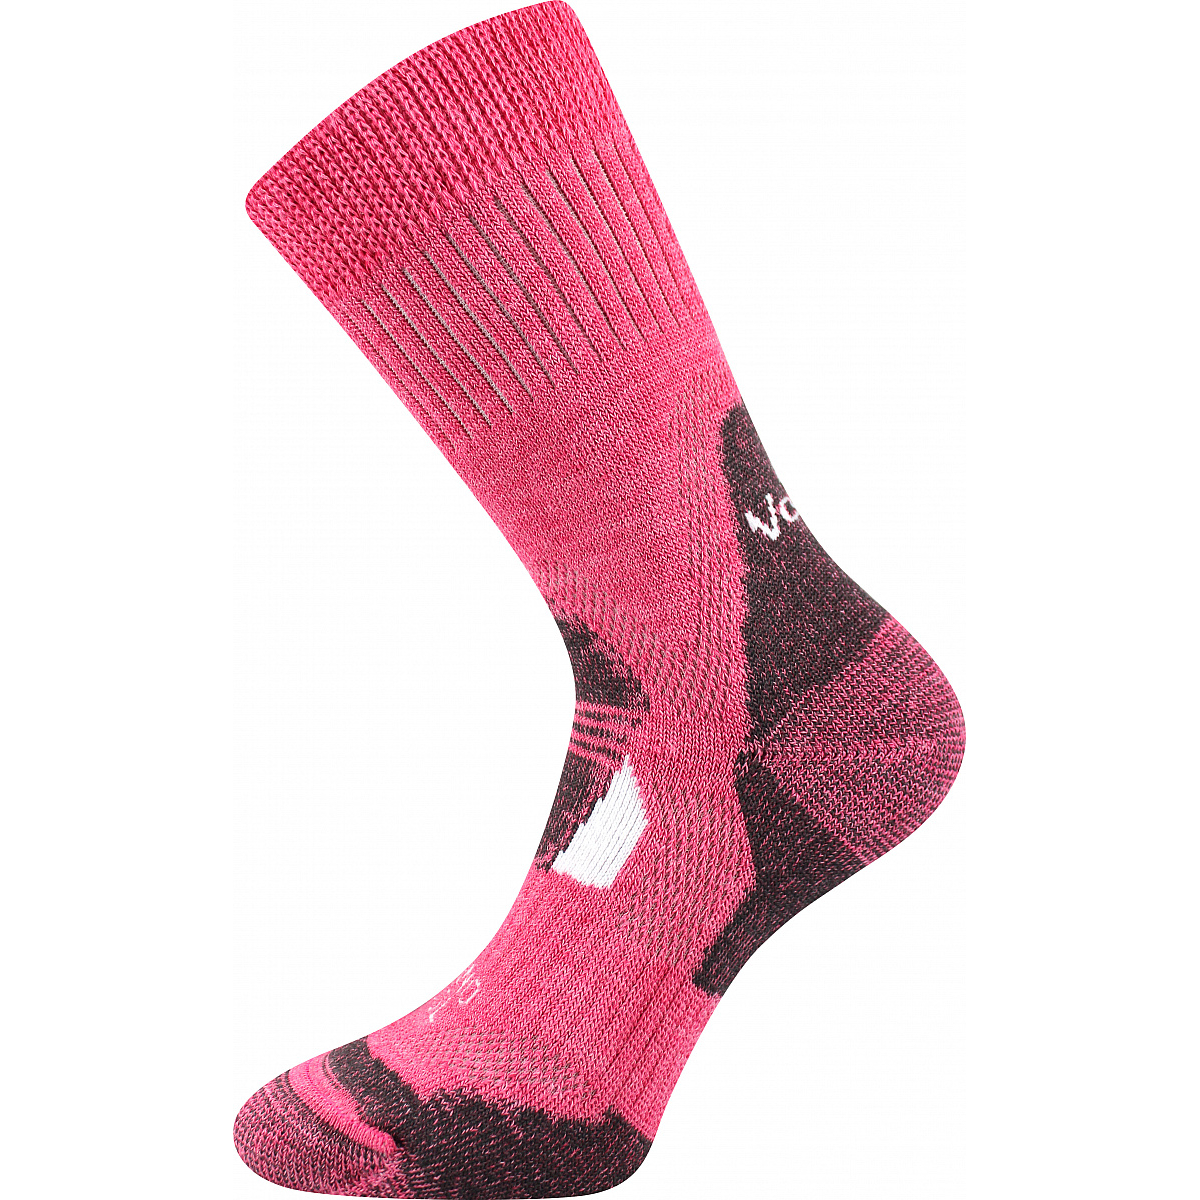 Extra teplé vlněné ponožky Voxx Stabil - růžové, 39-42